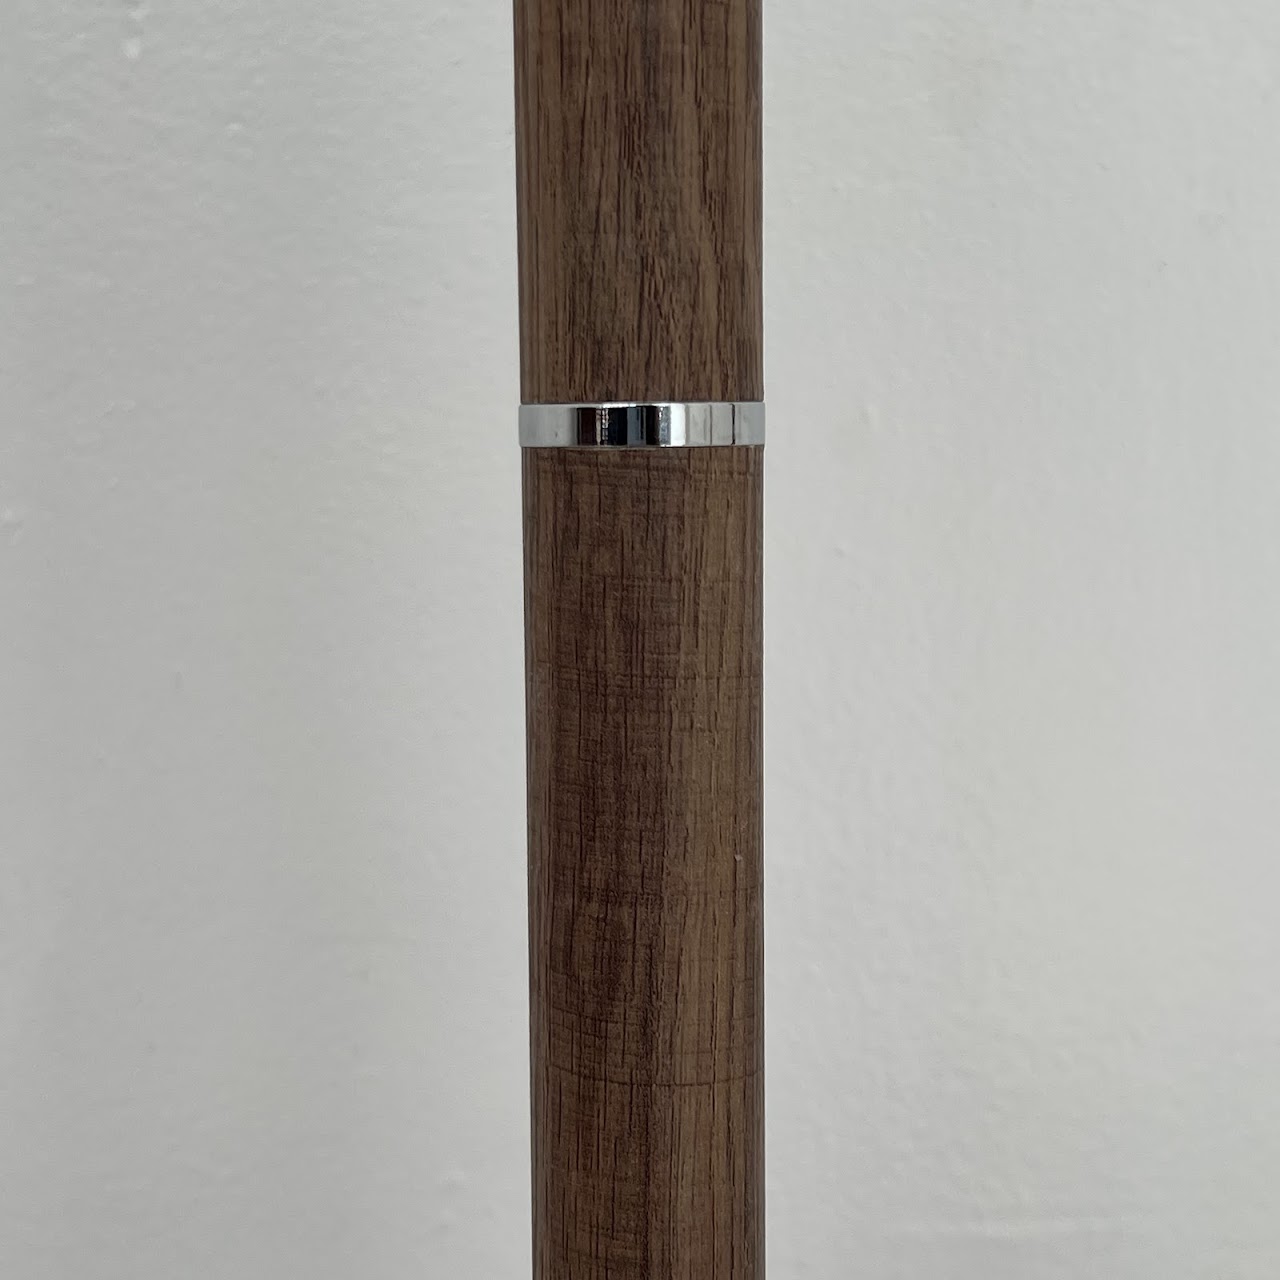 Polished Metal and Wood Floor Lamp Pair